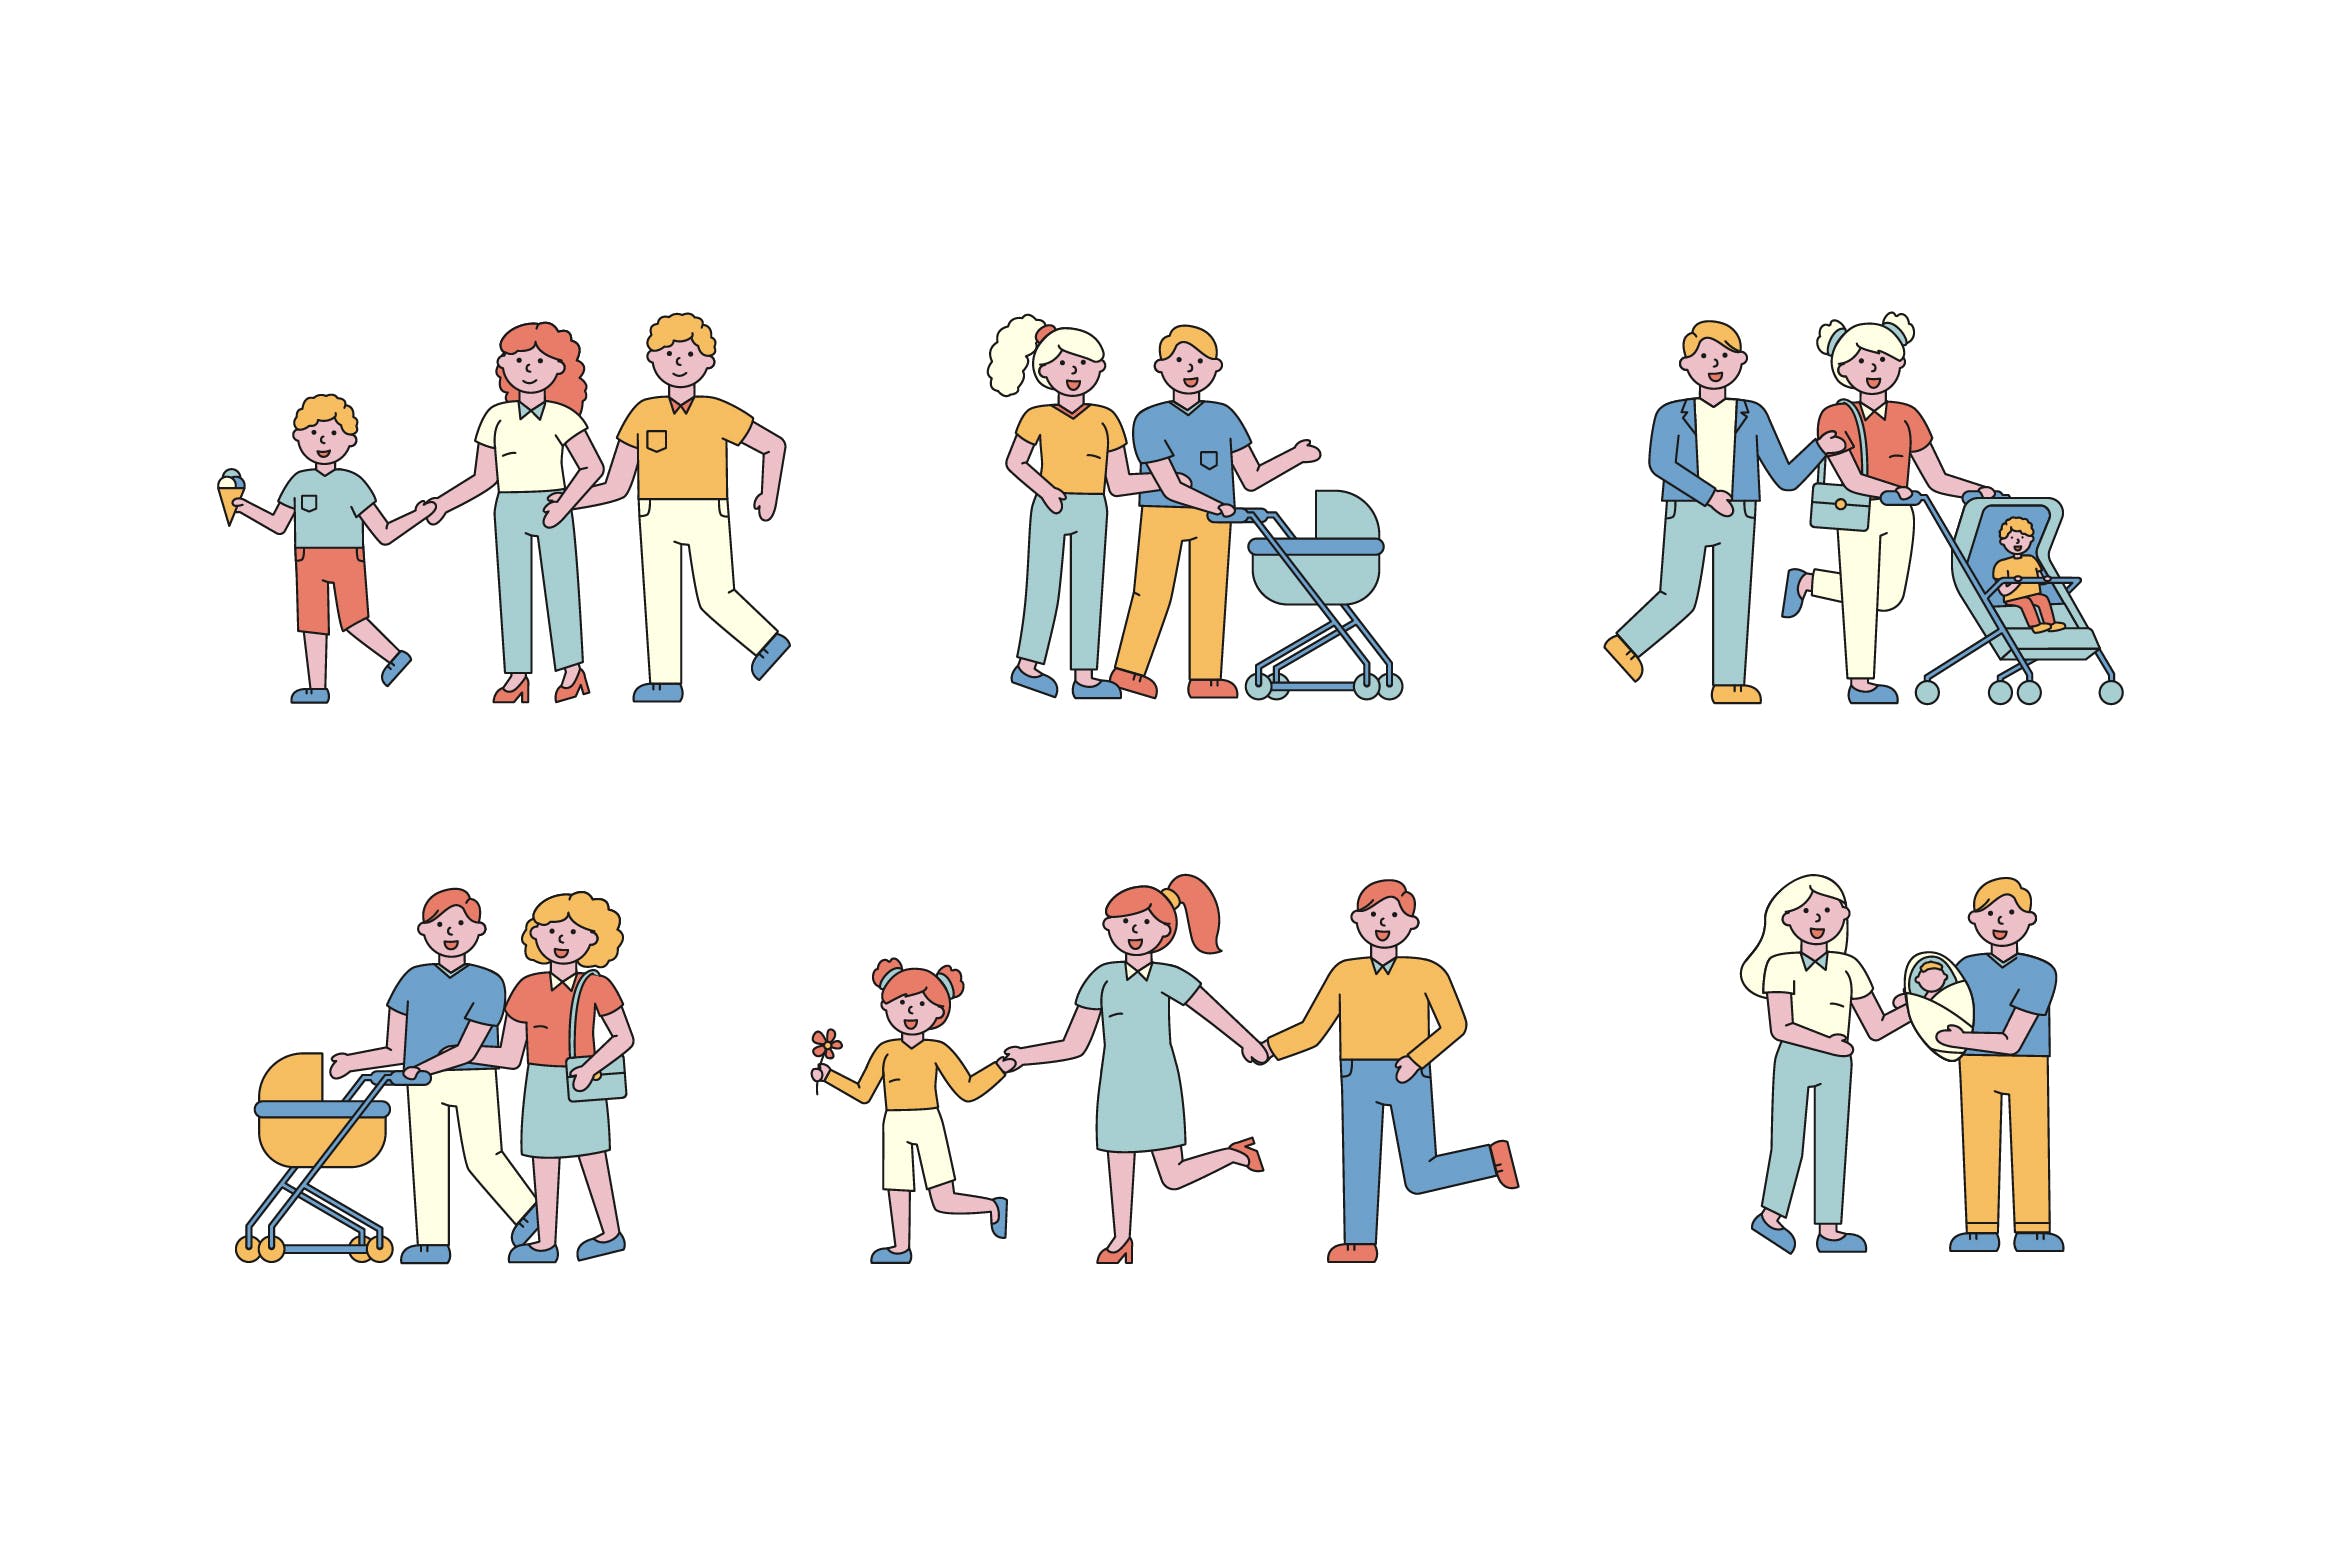 亲子活动主题人物形象线条艺术矢量插画素材库精选素材 Family Lineart People Character Collection插图